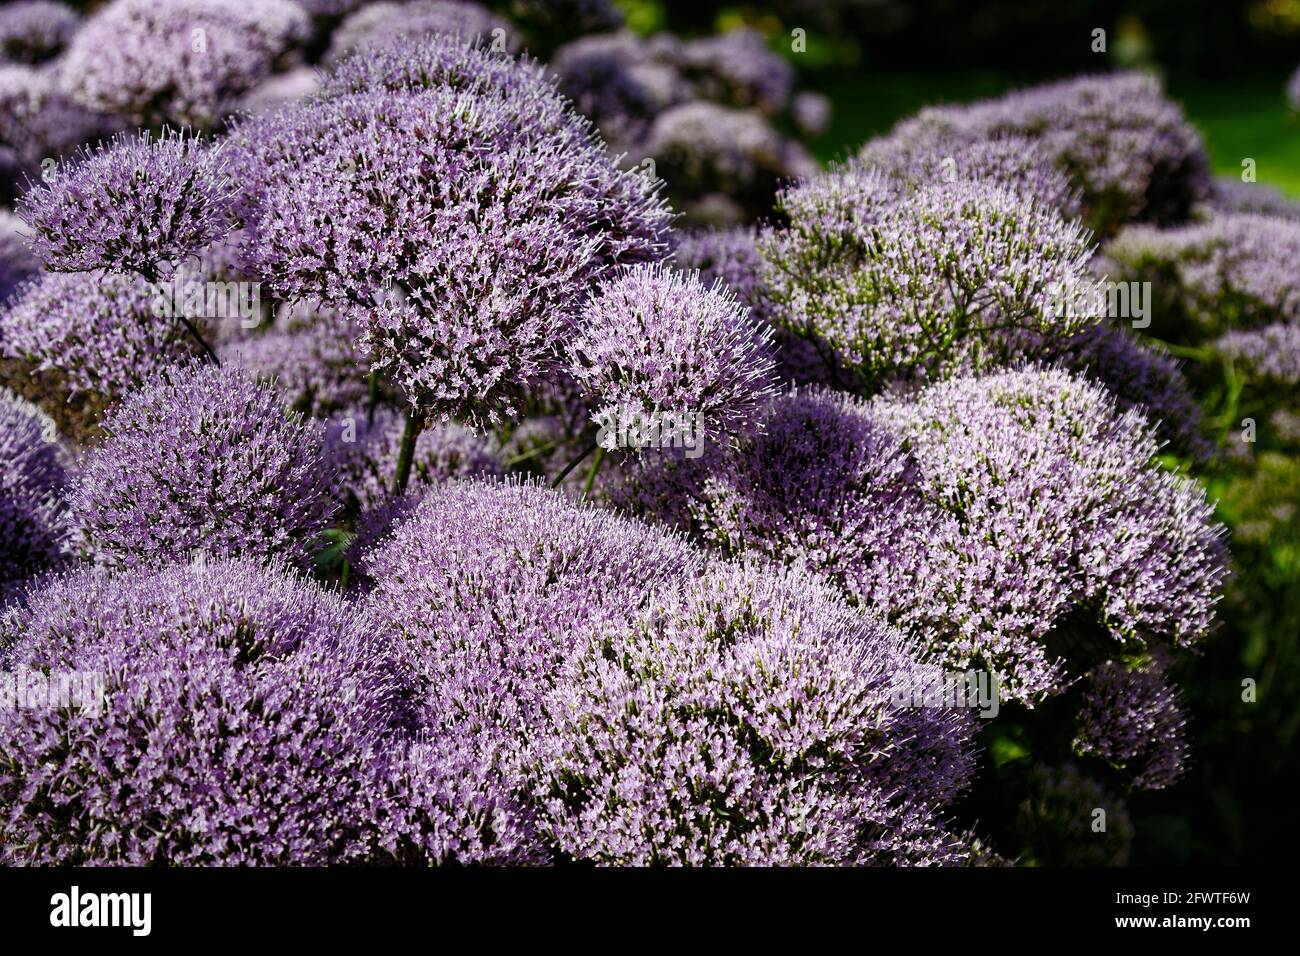 Allium Millenium, lavender, fall shape, cluster, cultivated flowers, Amaryllis family, nature, Pennsylvania, spring Stock Photo